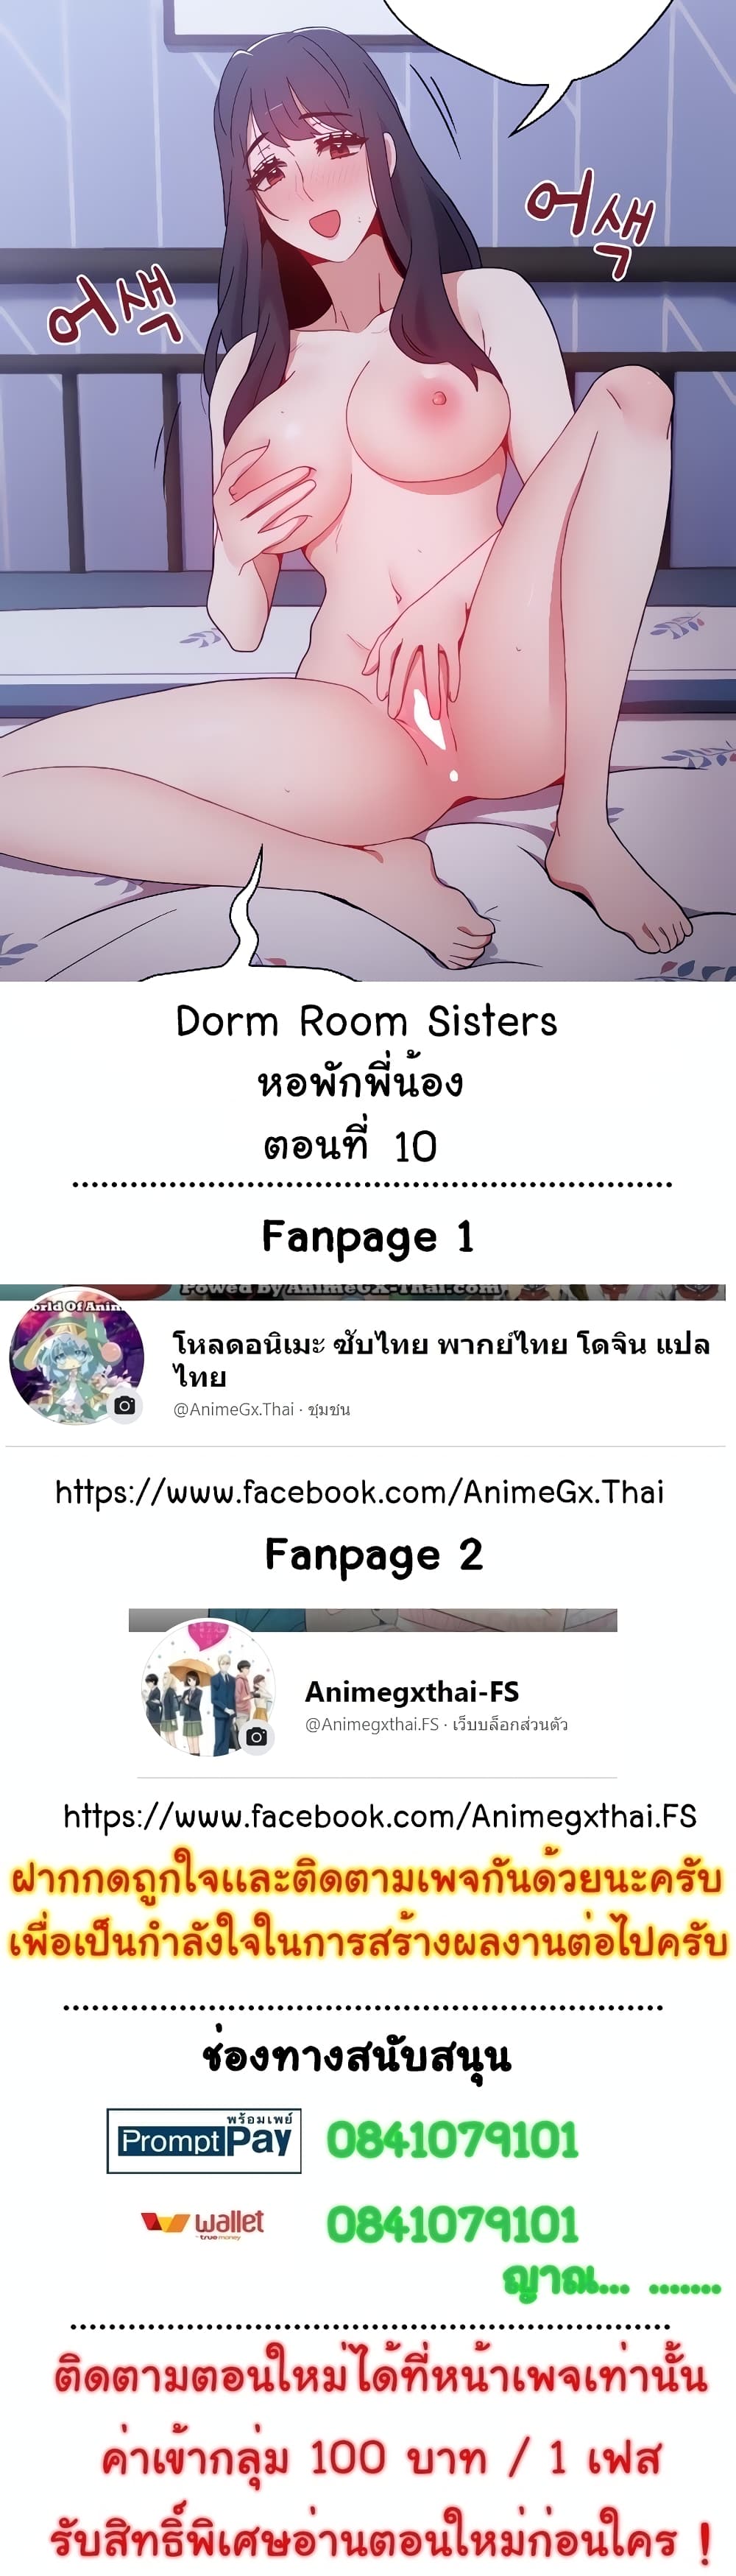 Dorm Room Sisters 10-10